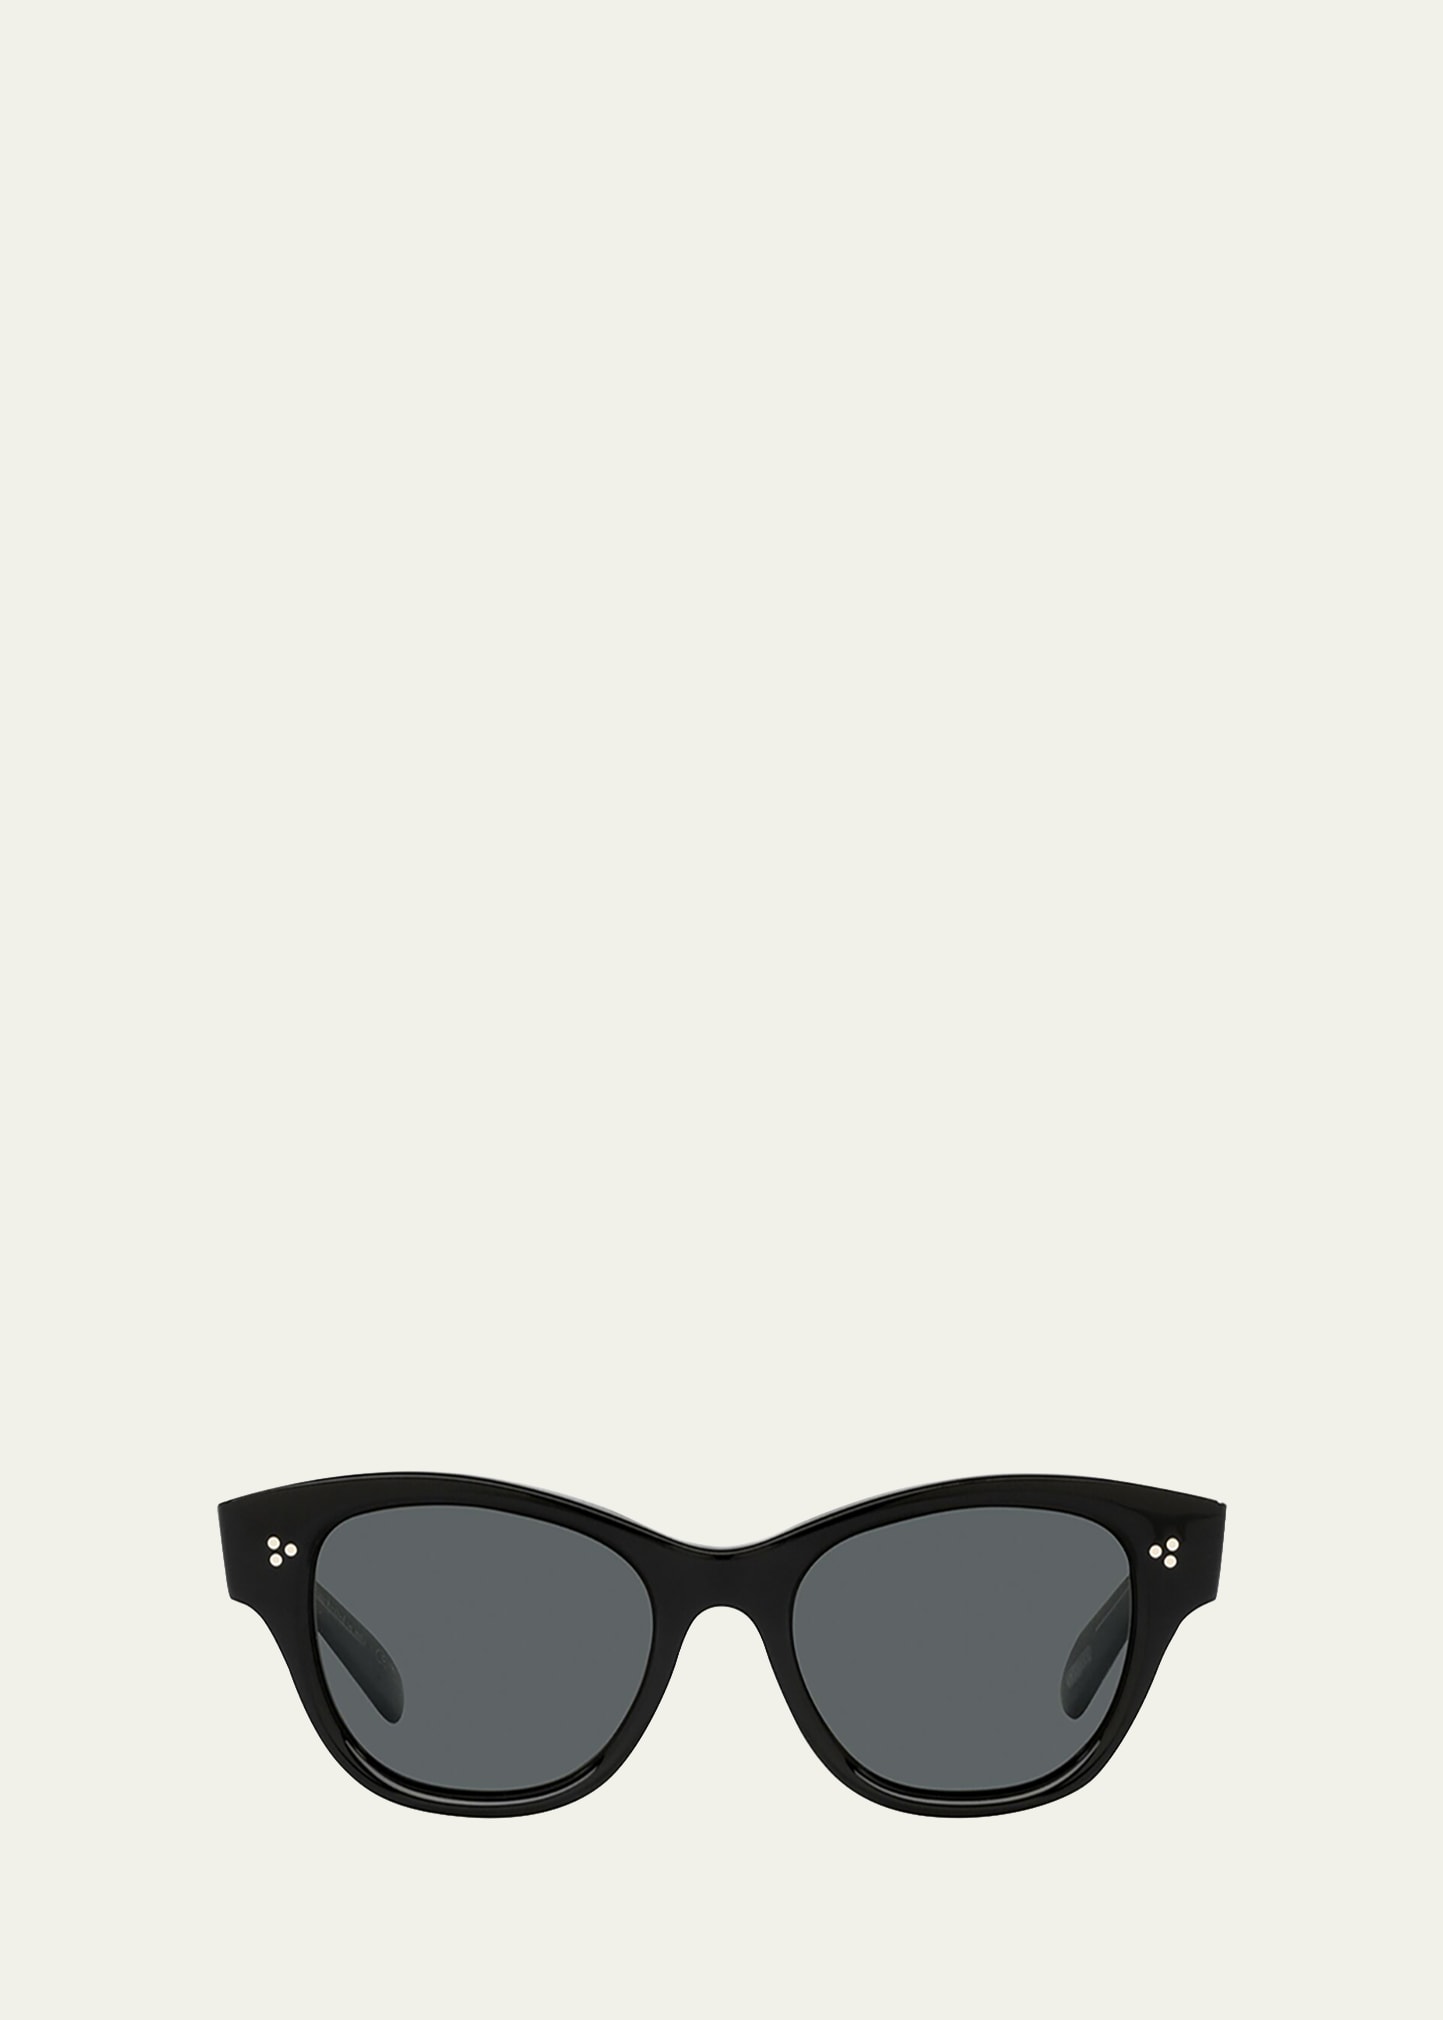 The Eadie Polarized Acetate Sunglasses